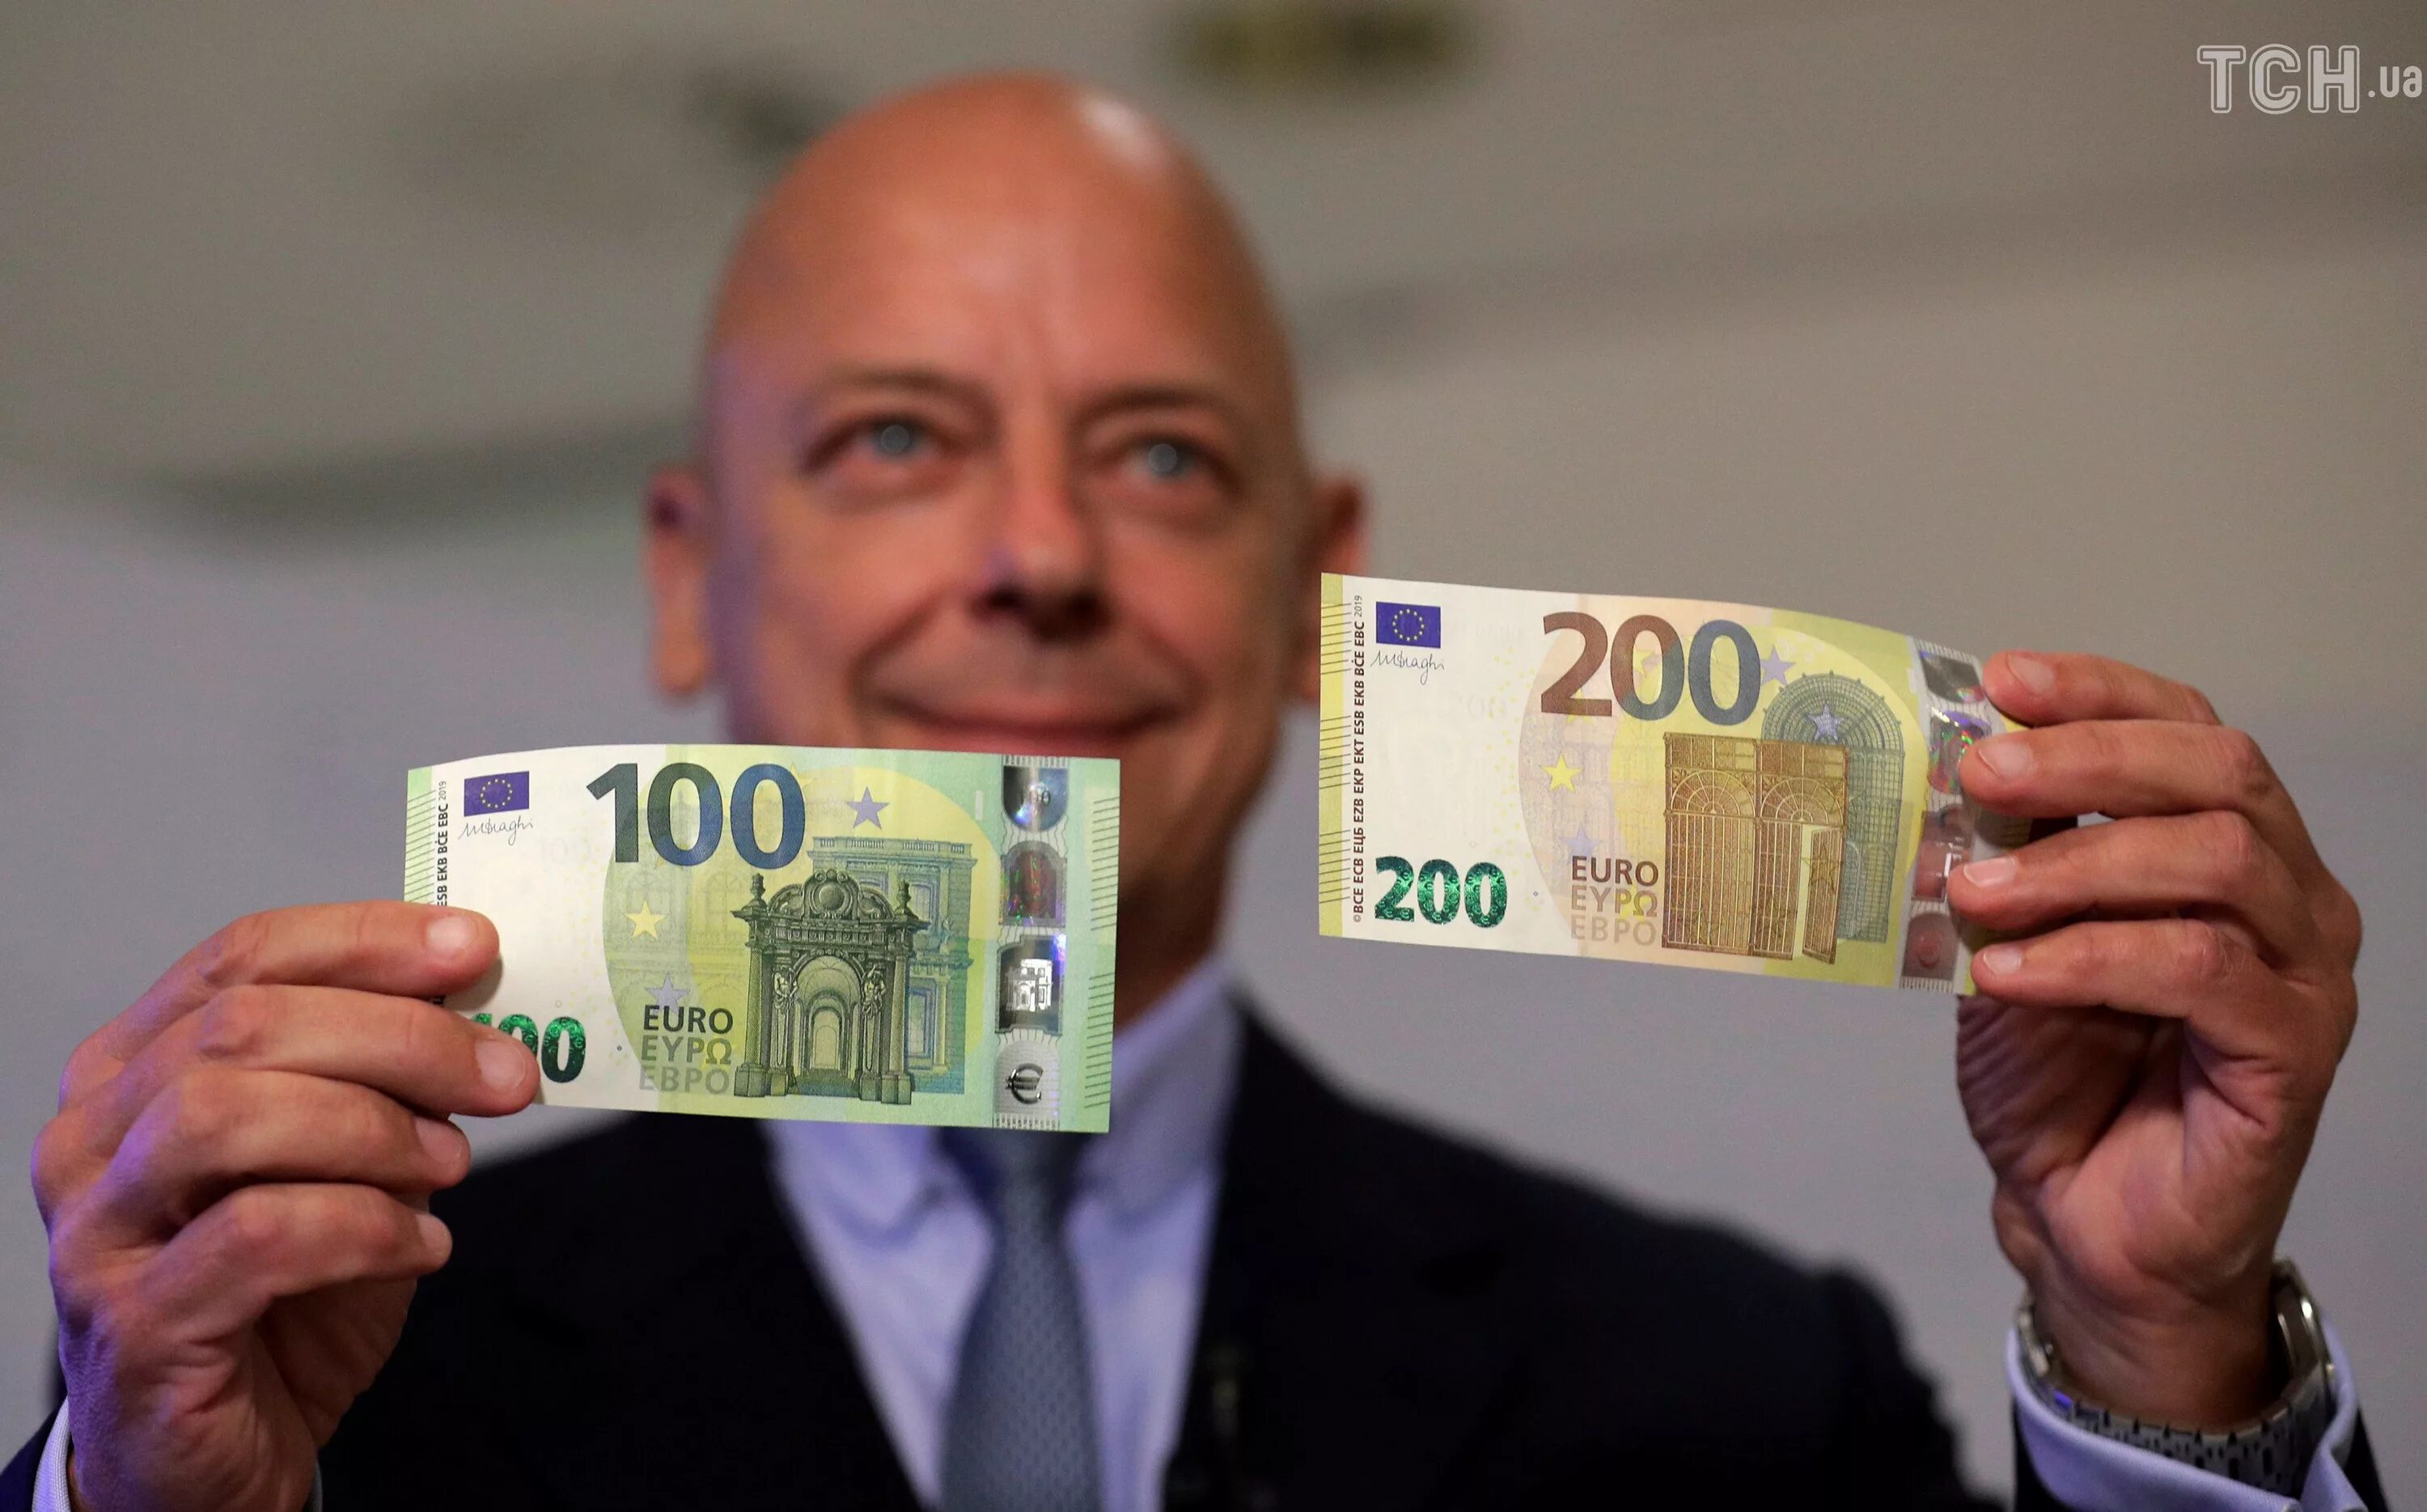 Евро банкноты номинал 200. Новая купюра 100 евро. Купюра 200 евро. Новый евро банкноты 100 и 200. 200 купюра фото